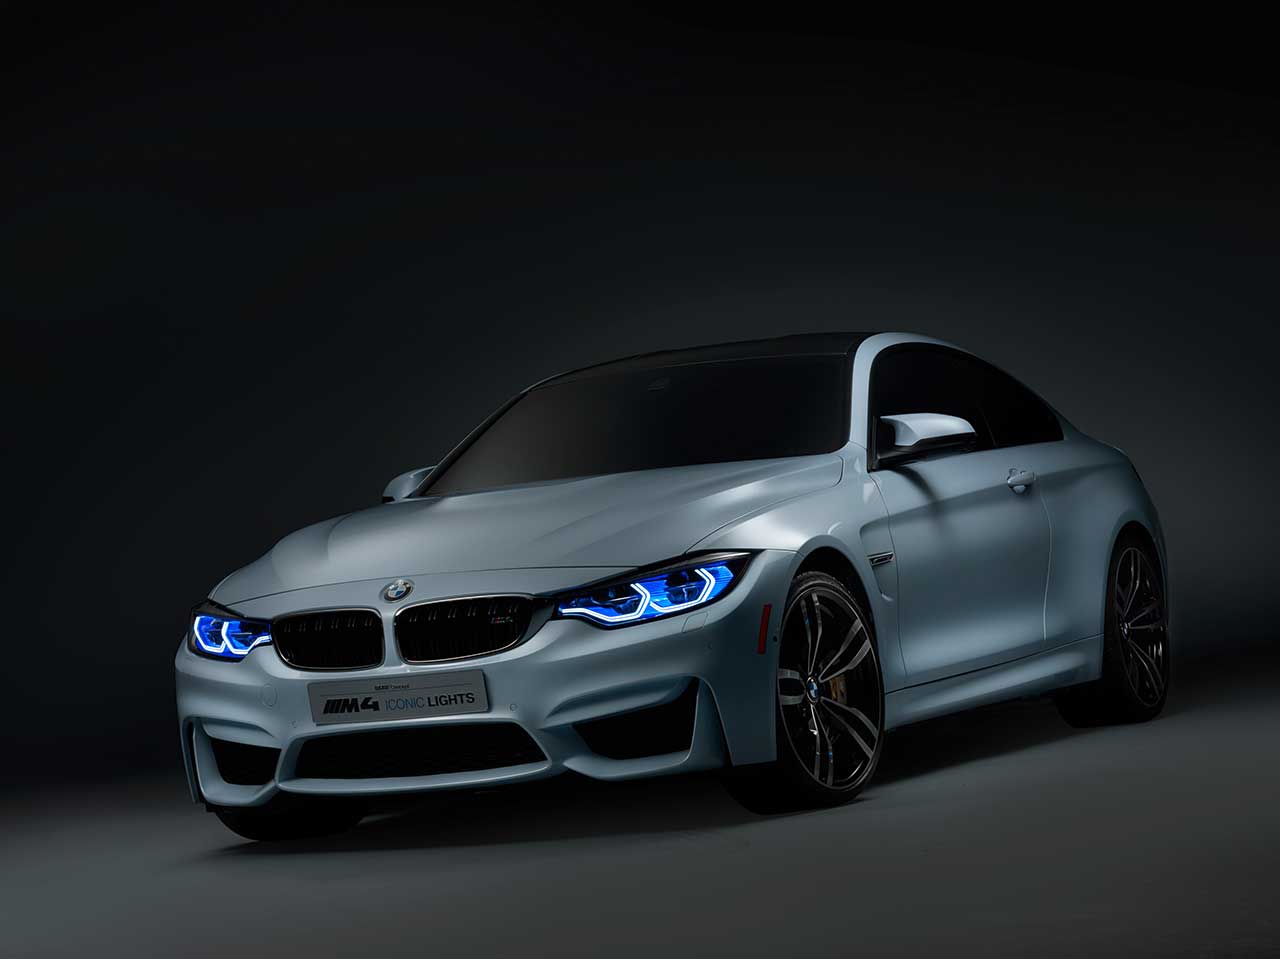 BMW M4 Iconic Lights Concept 2